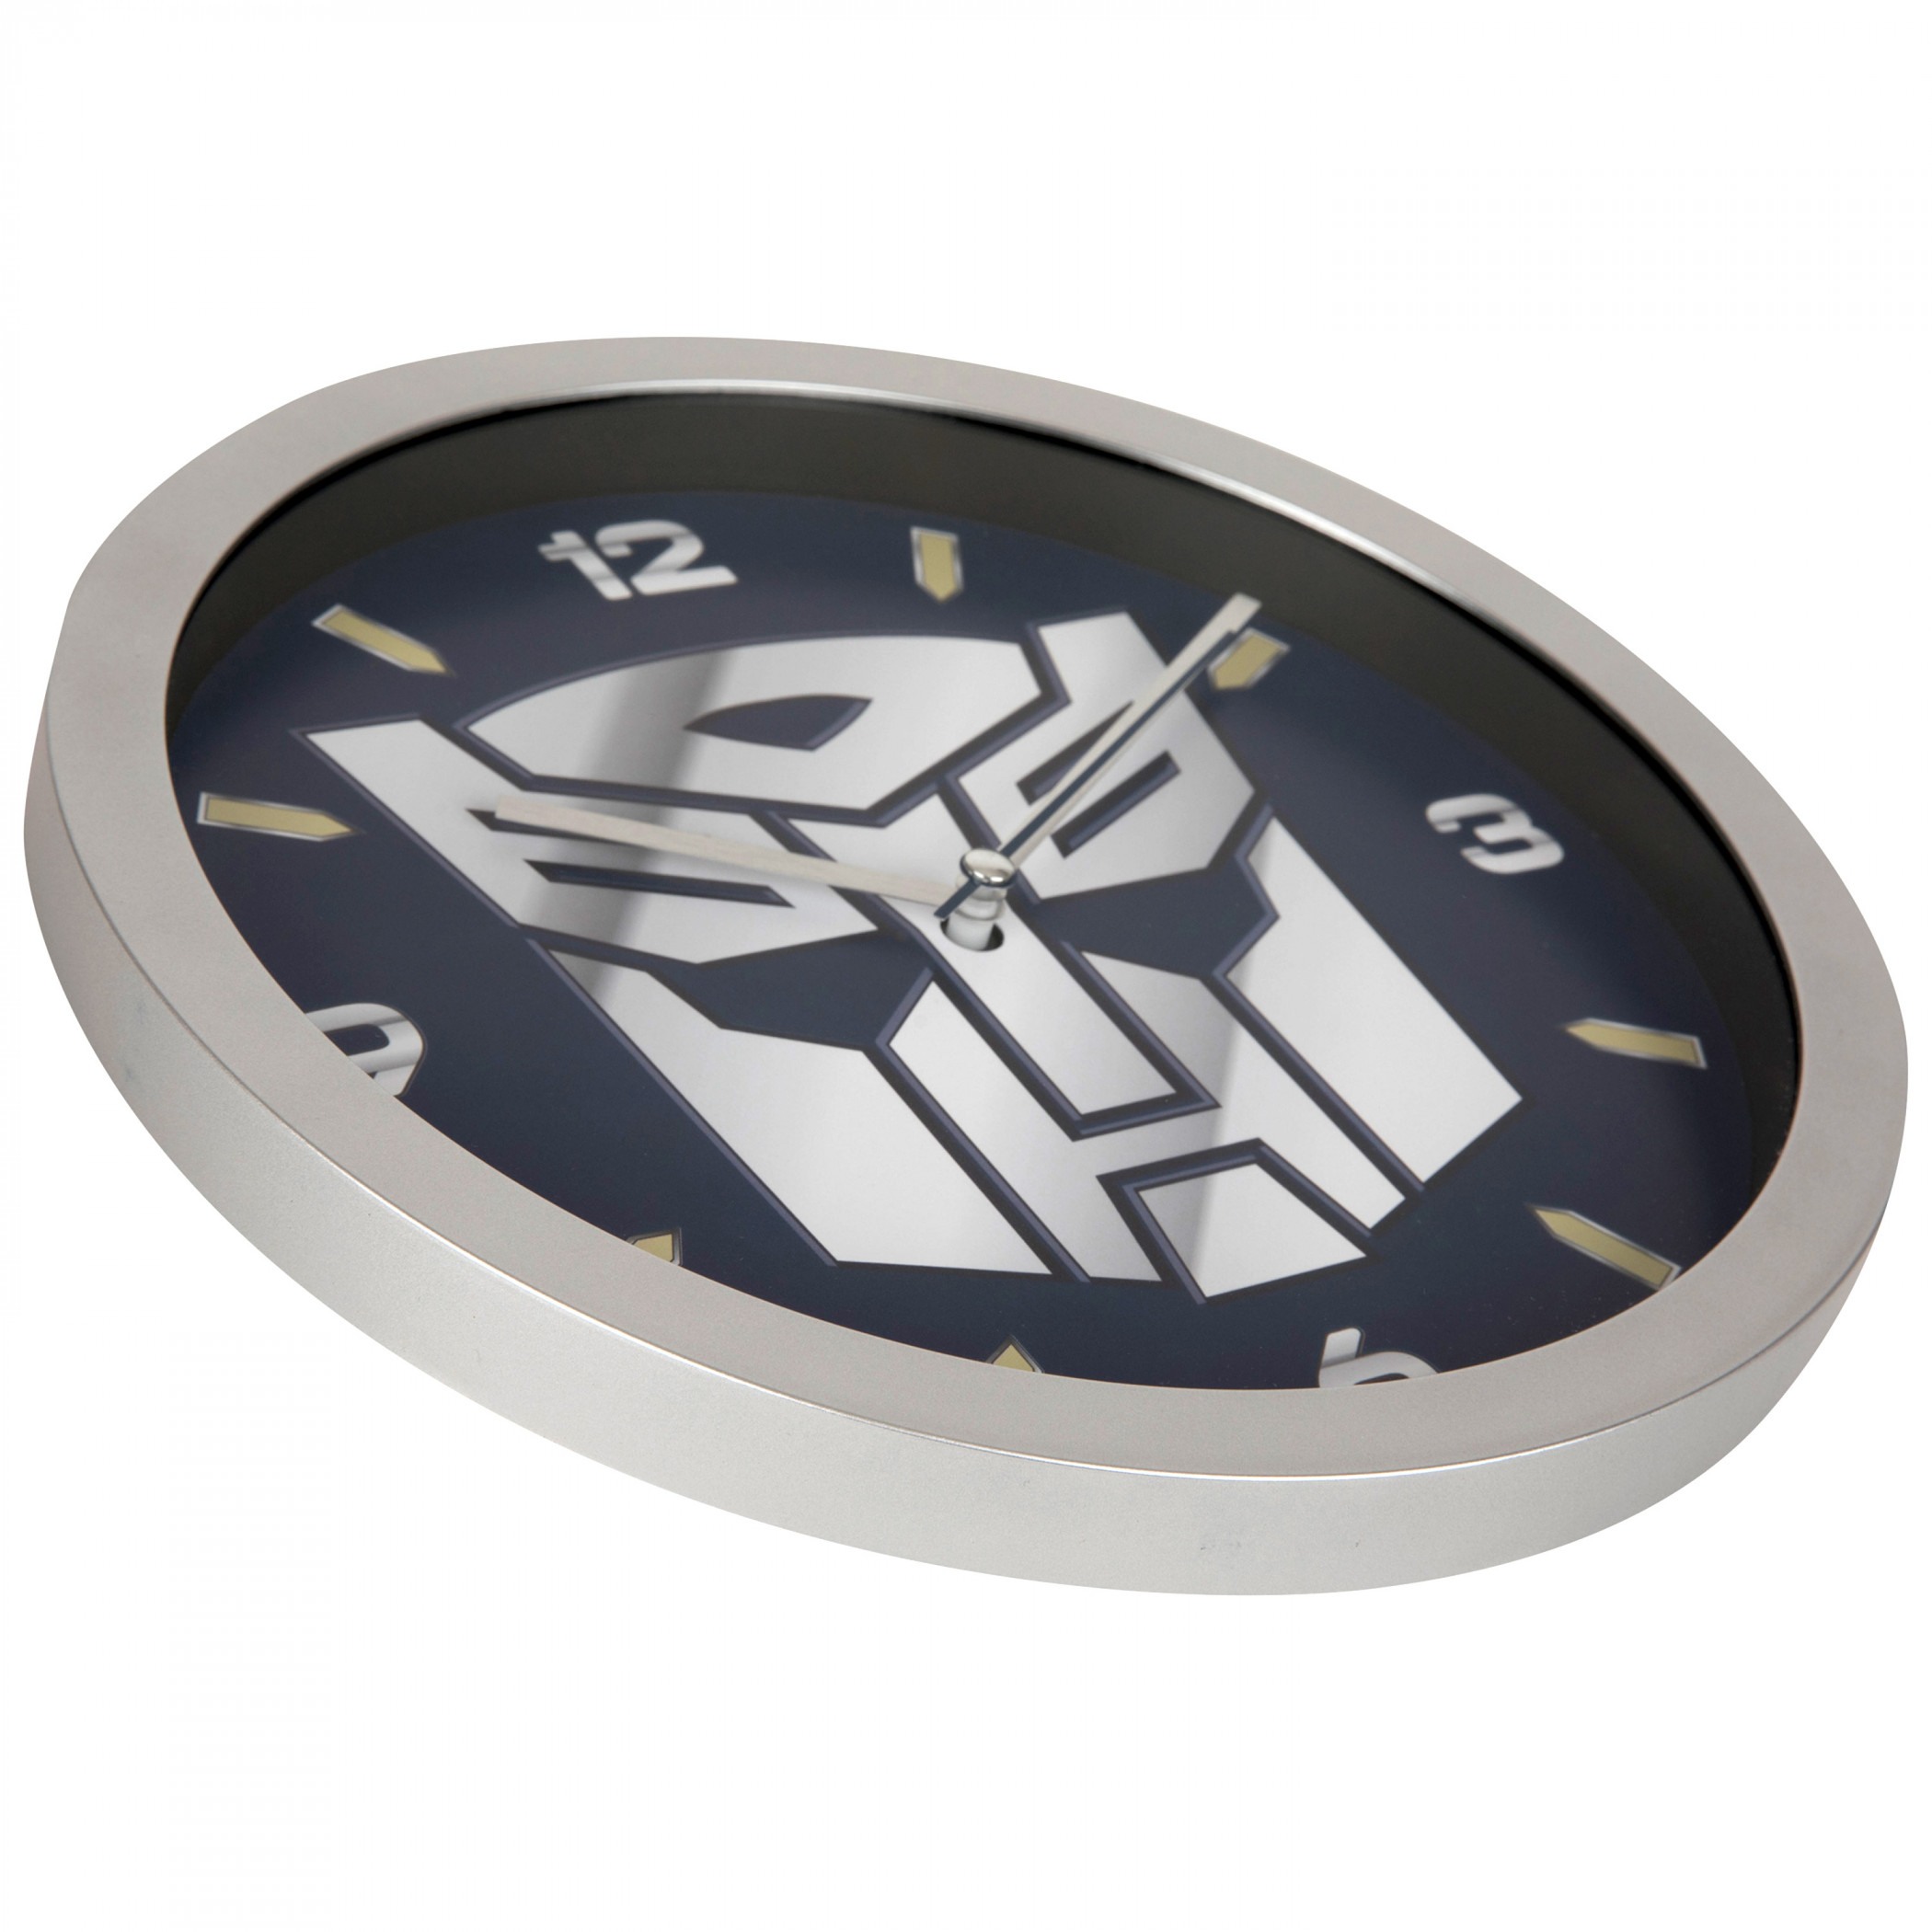 Transformers Autobot Insignia Chrome Wall Clock